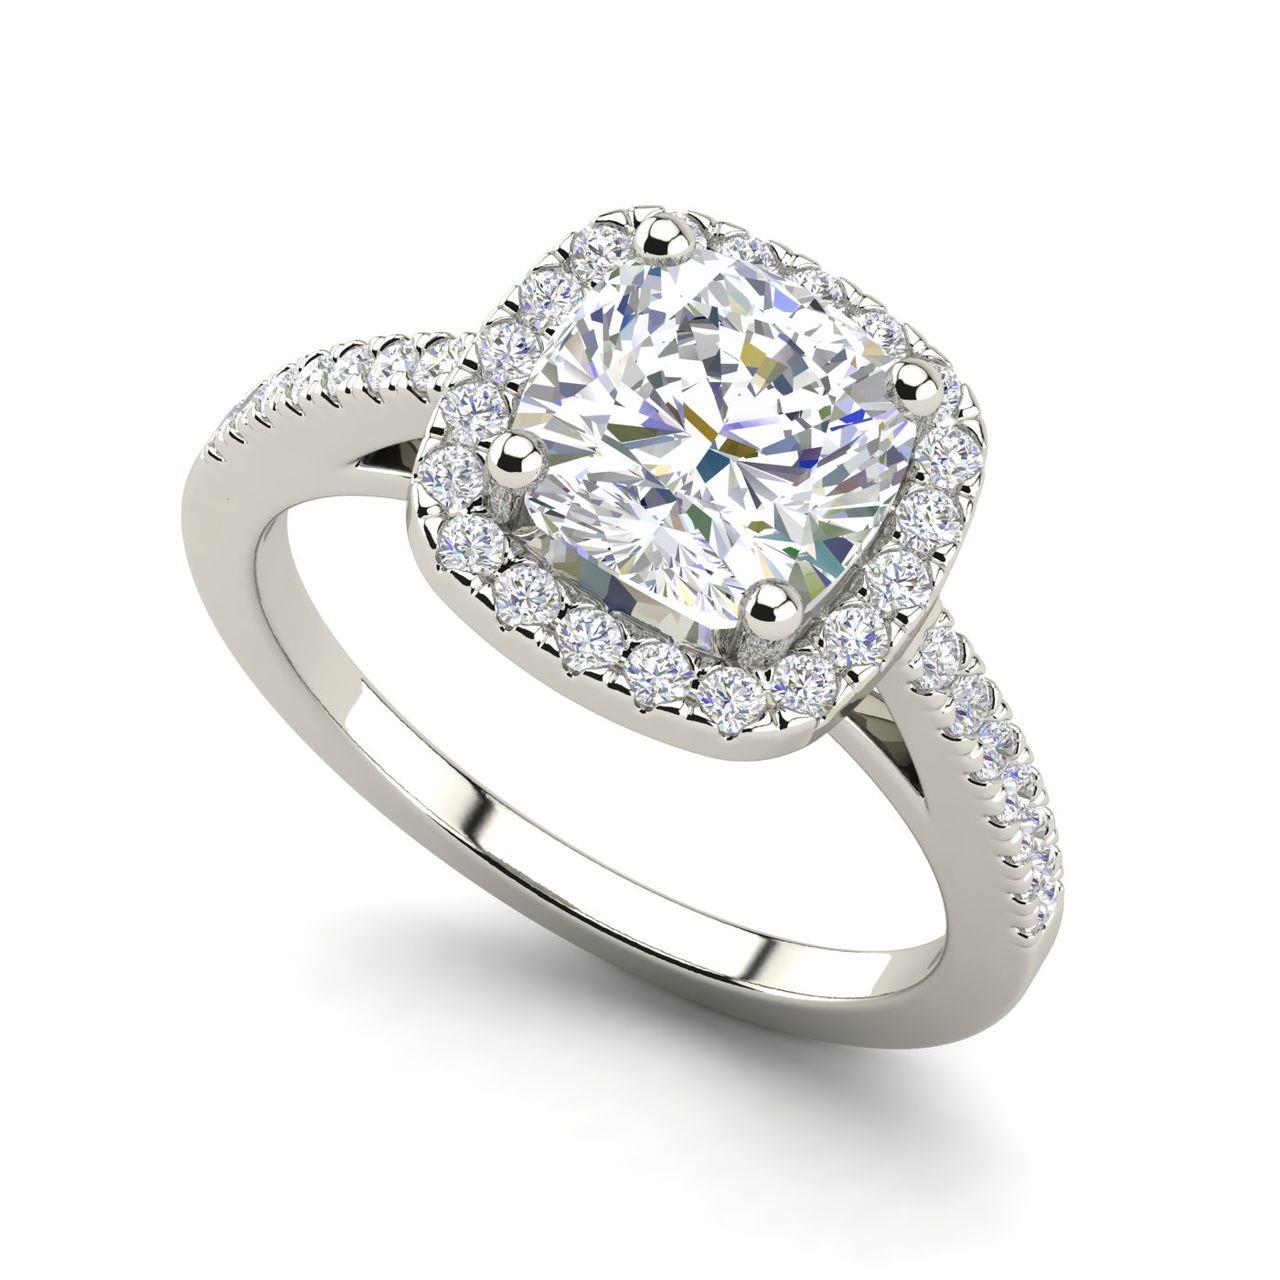 Halo 1.95 Carat Cushion Cut Diamond Engagement Ring